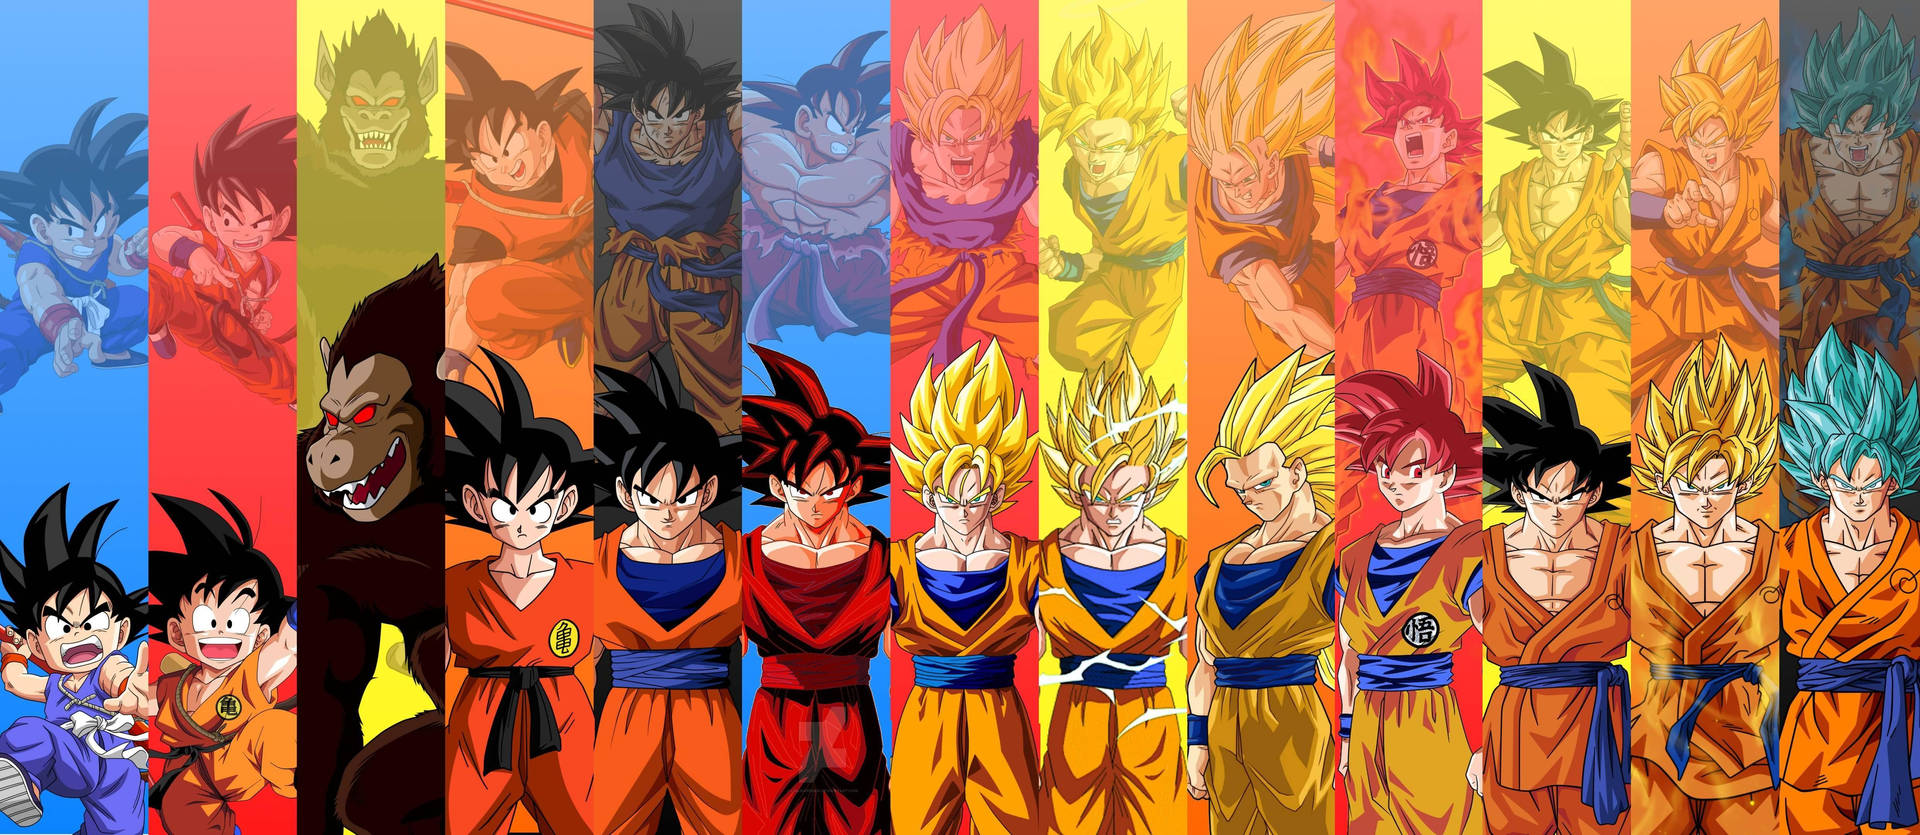 Goku 4968X2160 Wallpaper and Background Image